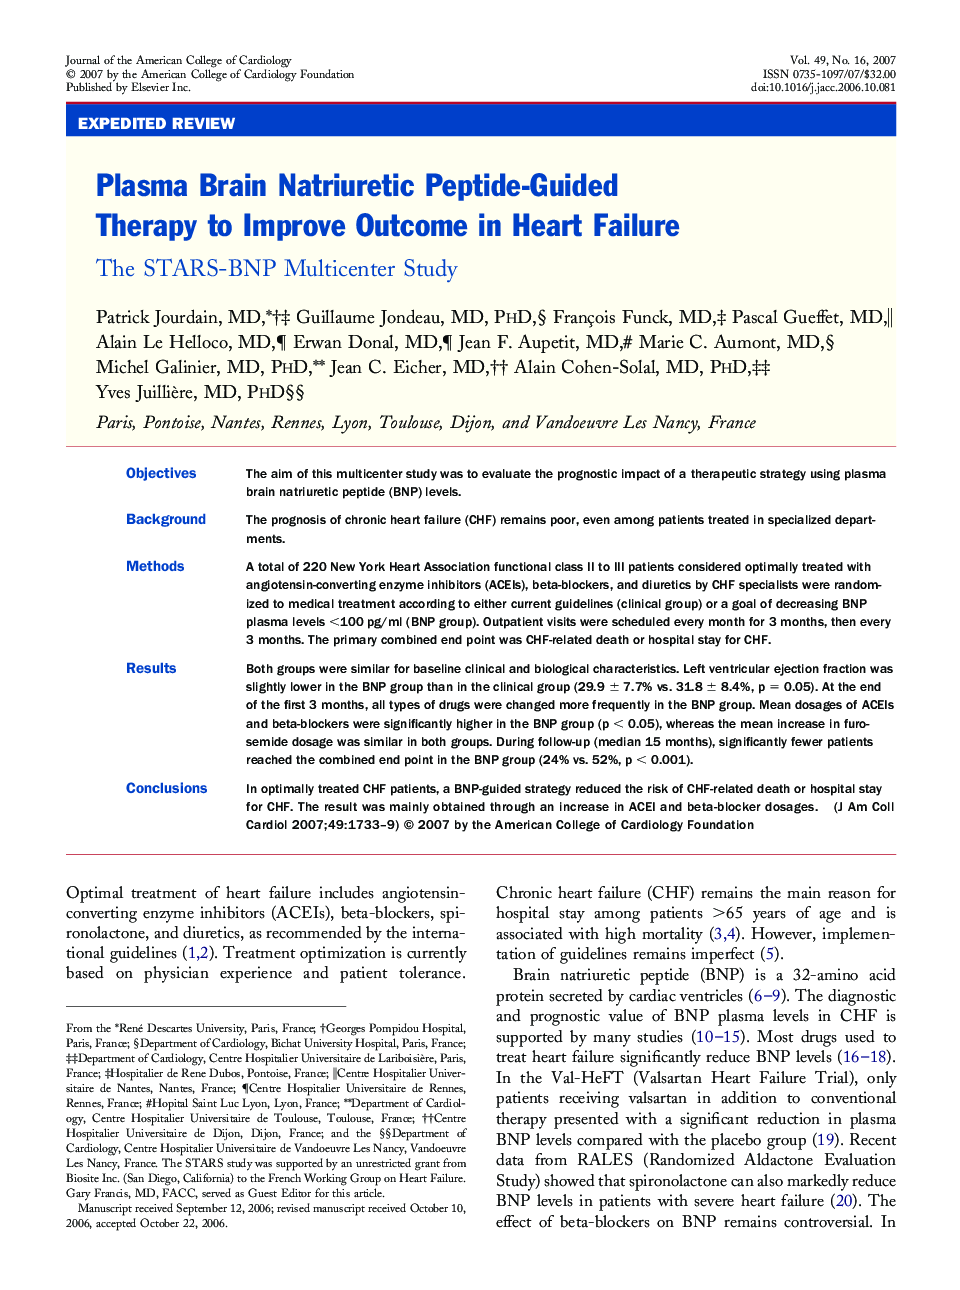 Plasma Brain Natriuretic Peptide-Guided Therapy to Improve Outcome in Heart Failure : The STARS-BNP Multicenter Study